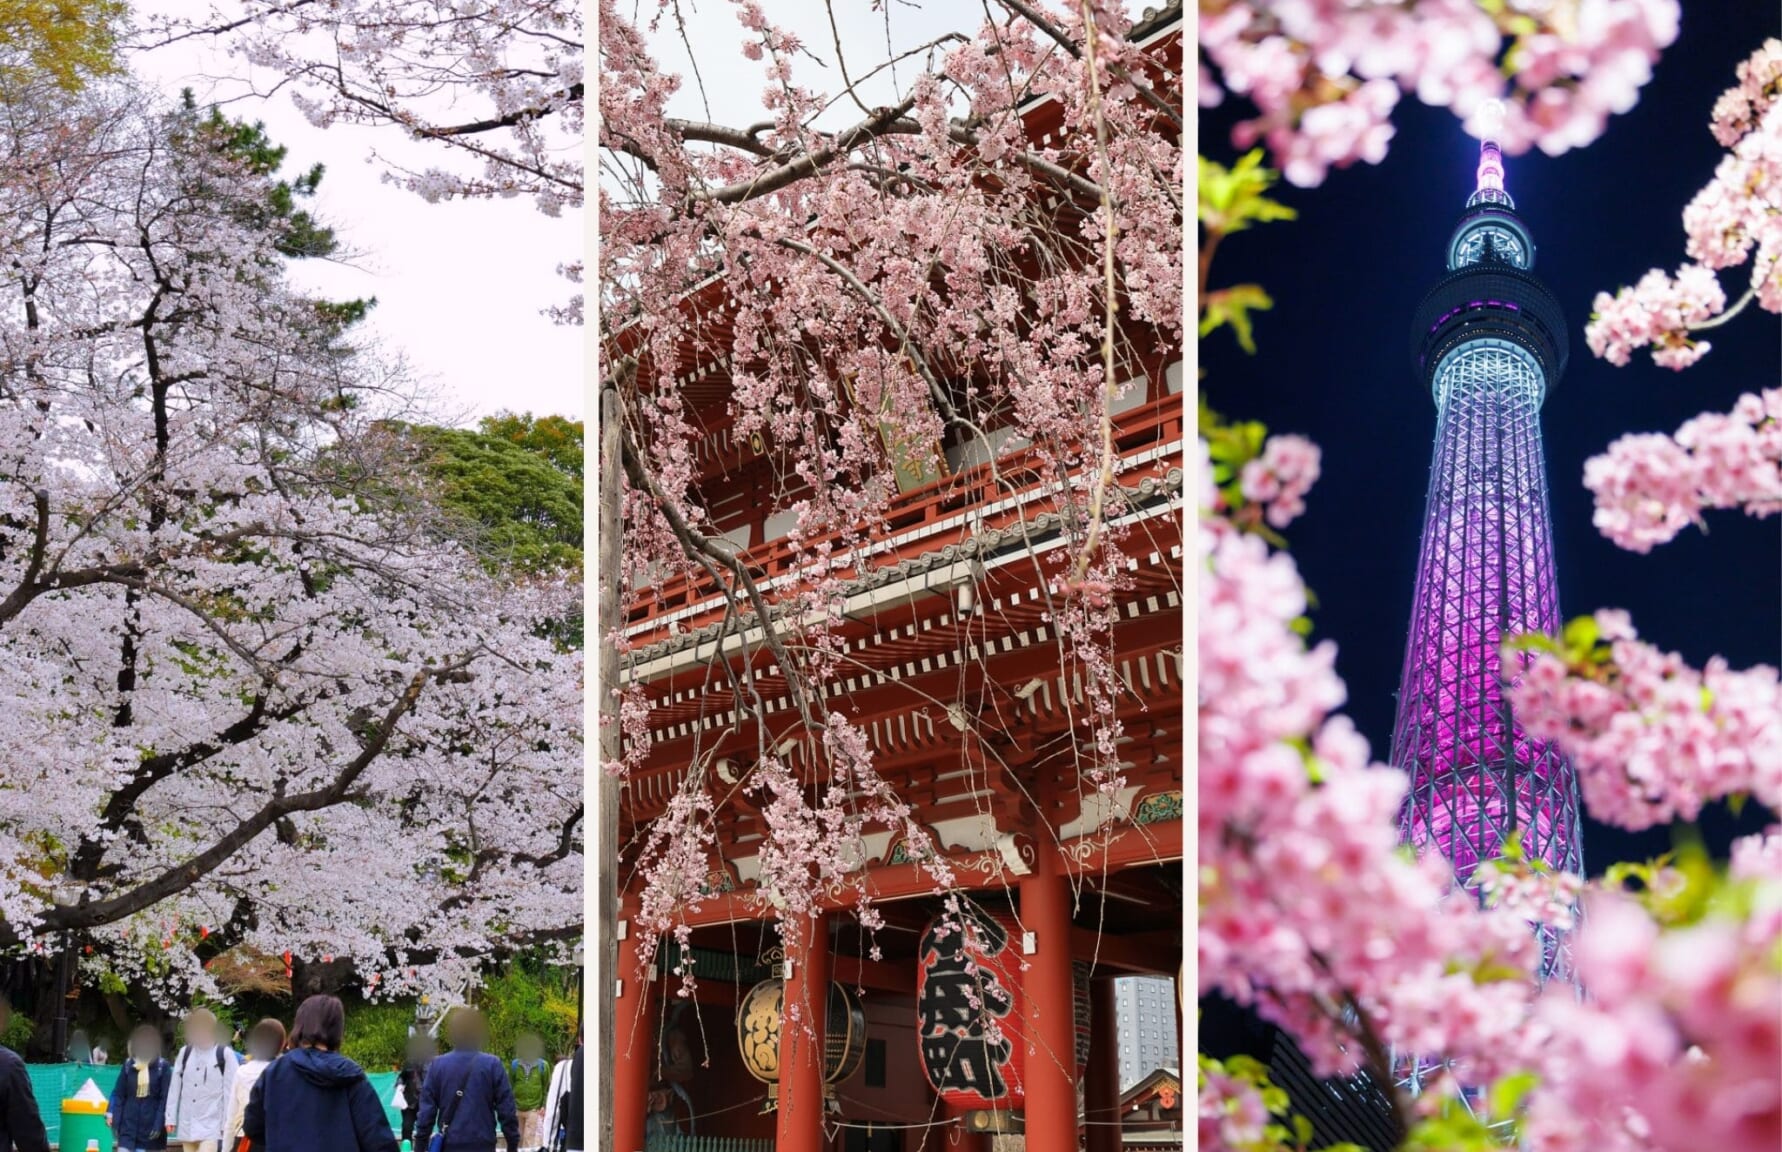 Ueno, Sensoji and Skytree during spring